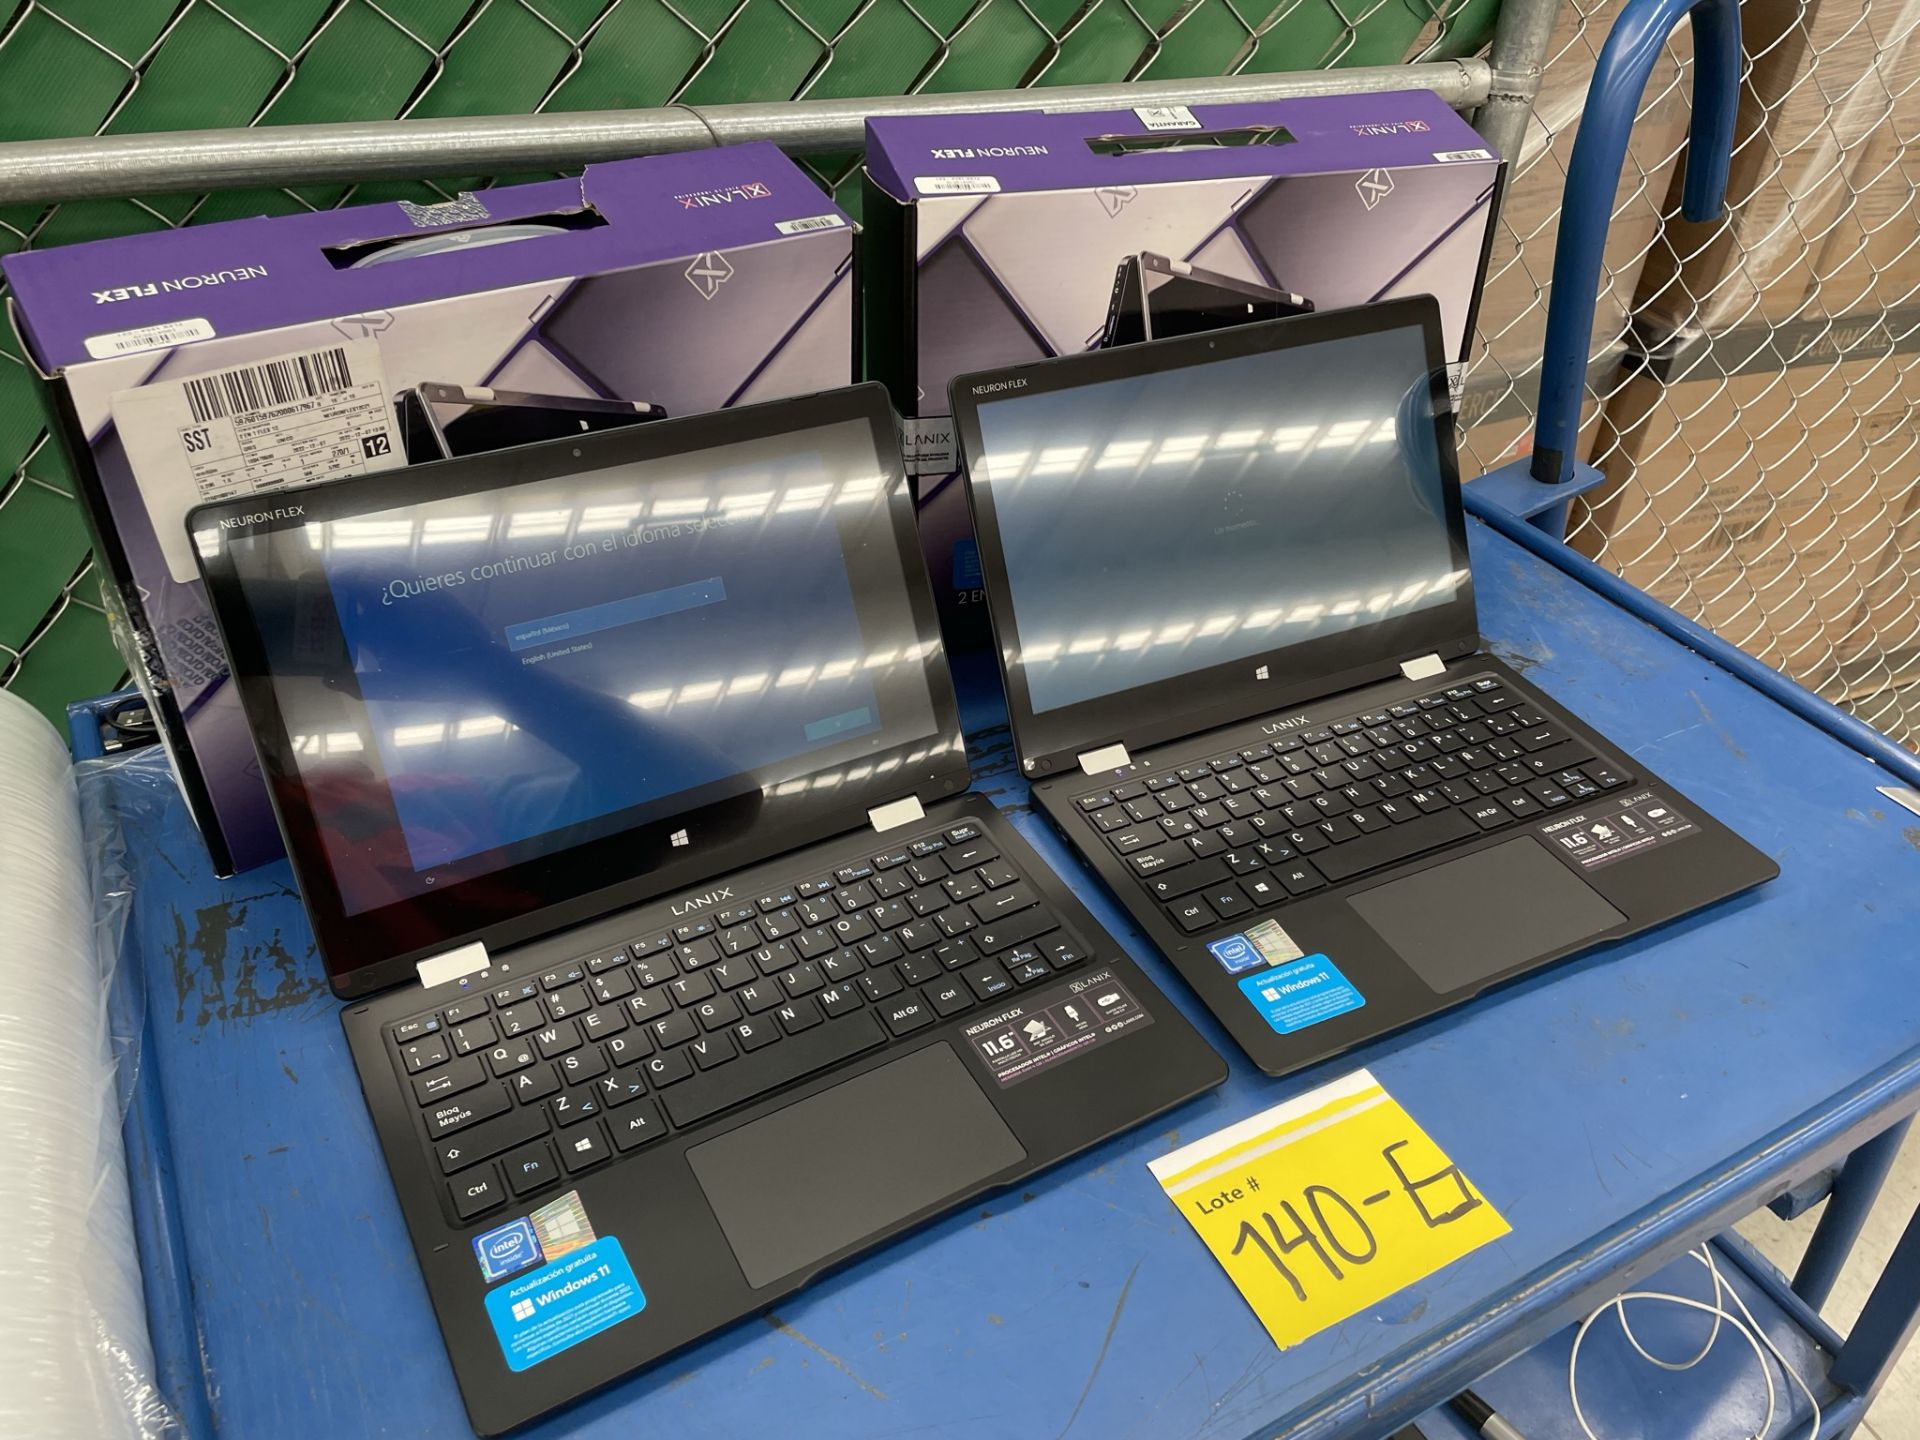 (EQUIPO NUEVO) Lote De 2 Laptops Contiene: 1 Laptop Marca LANIX, Modelo NEURON FLEX, Serie N/D, Col - Image 5 of 9